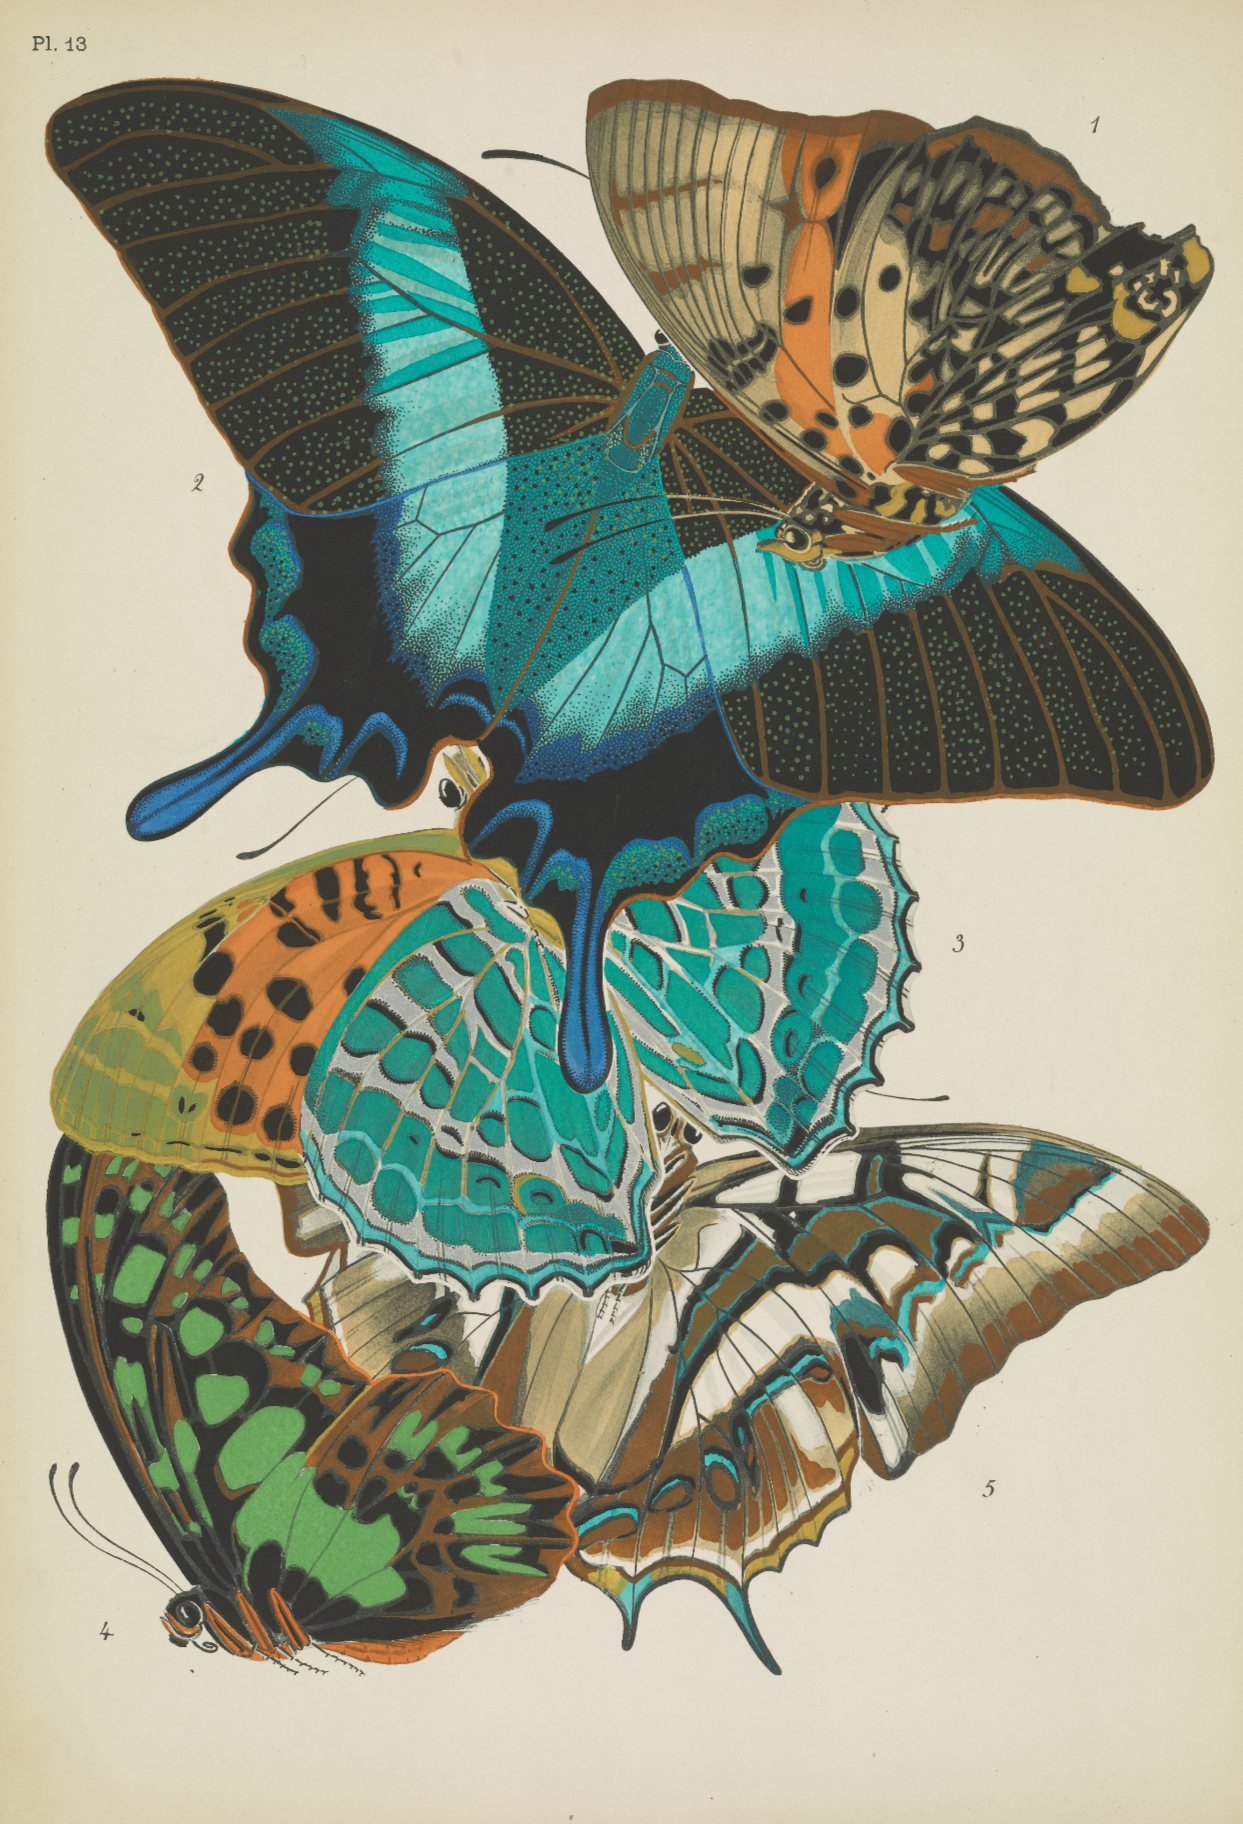 Papillons (lámina 13) de Emile-Allain Séguy, 1925 - Postal